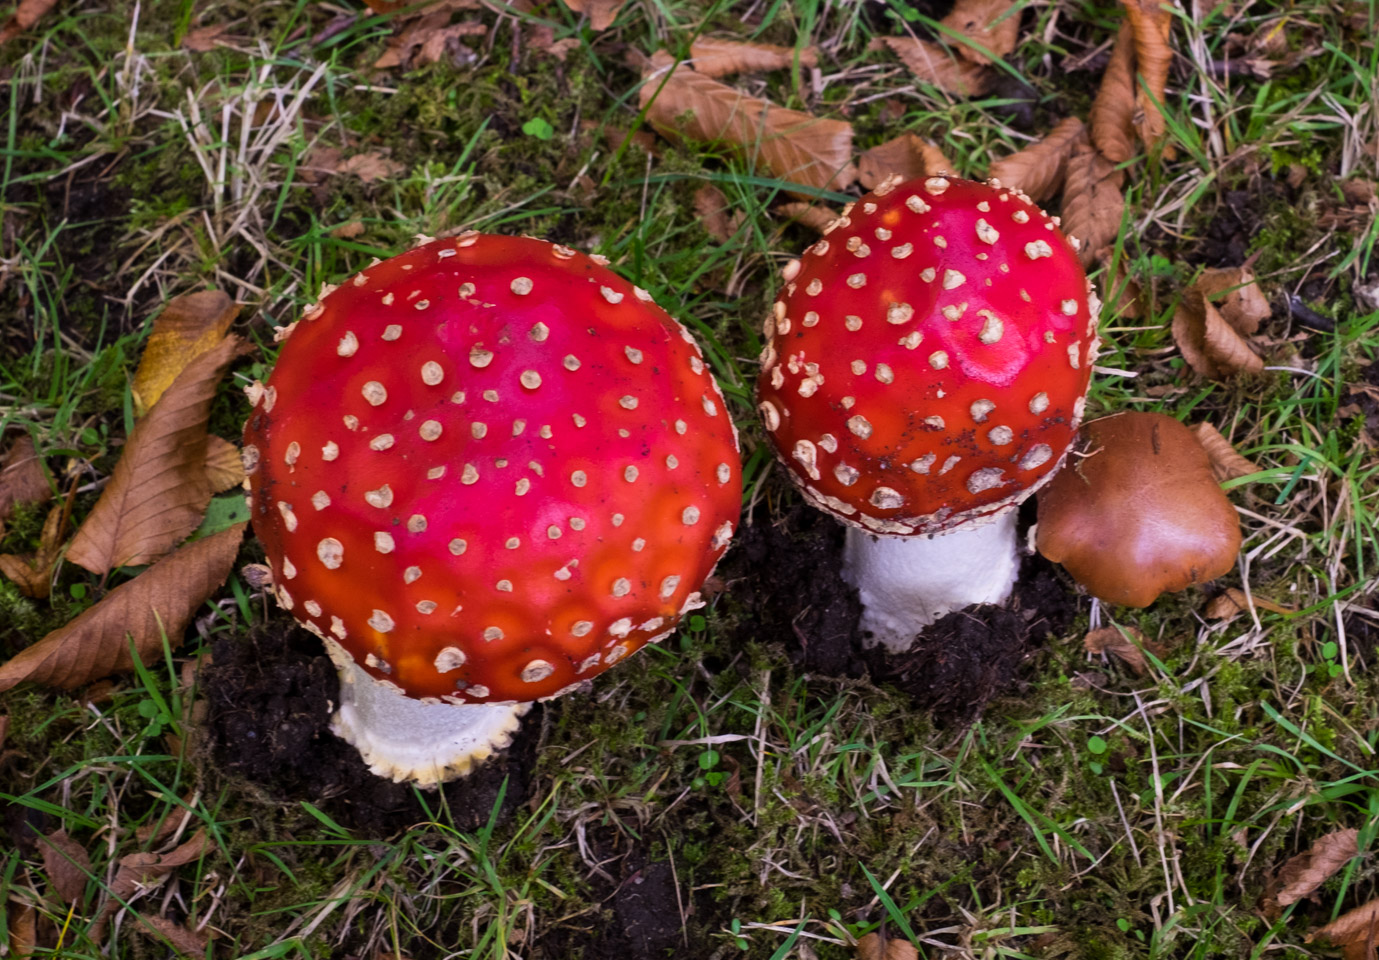 Silly mushrooms